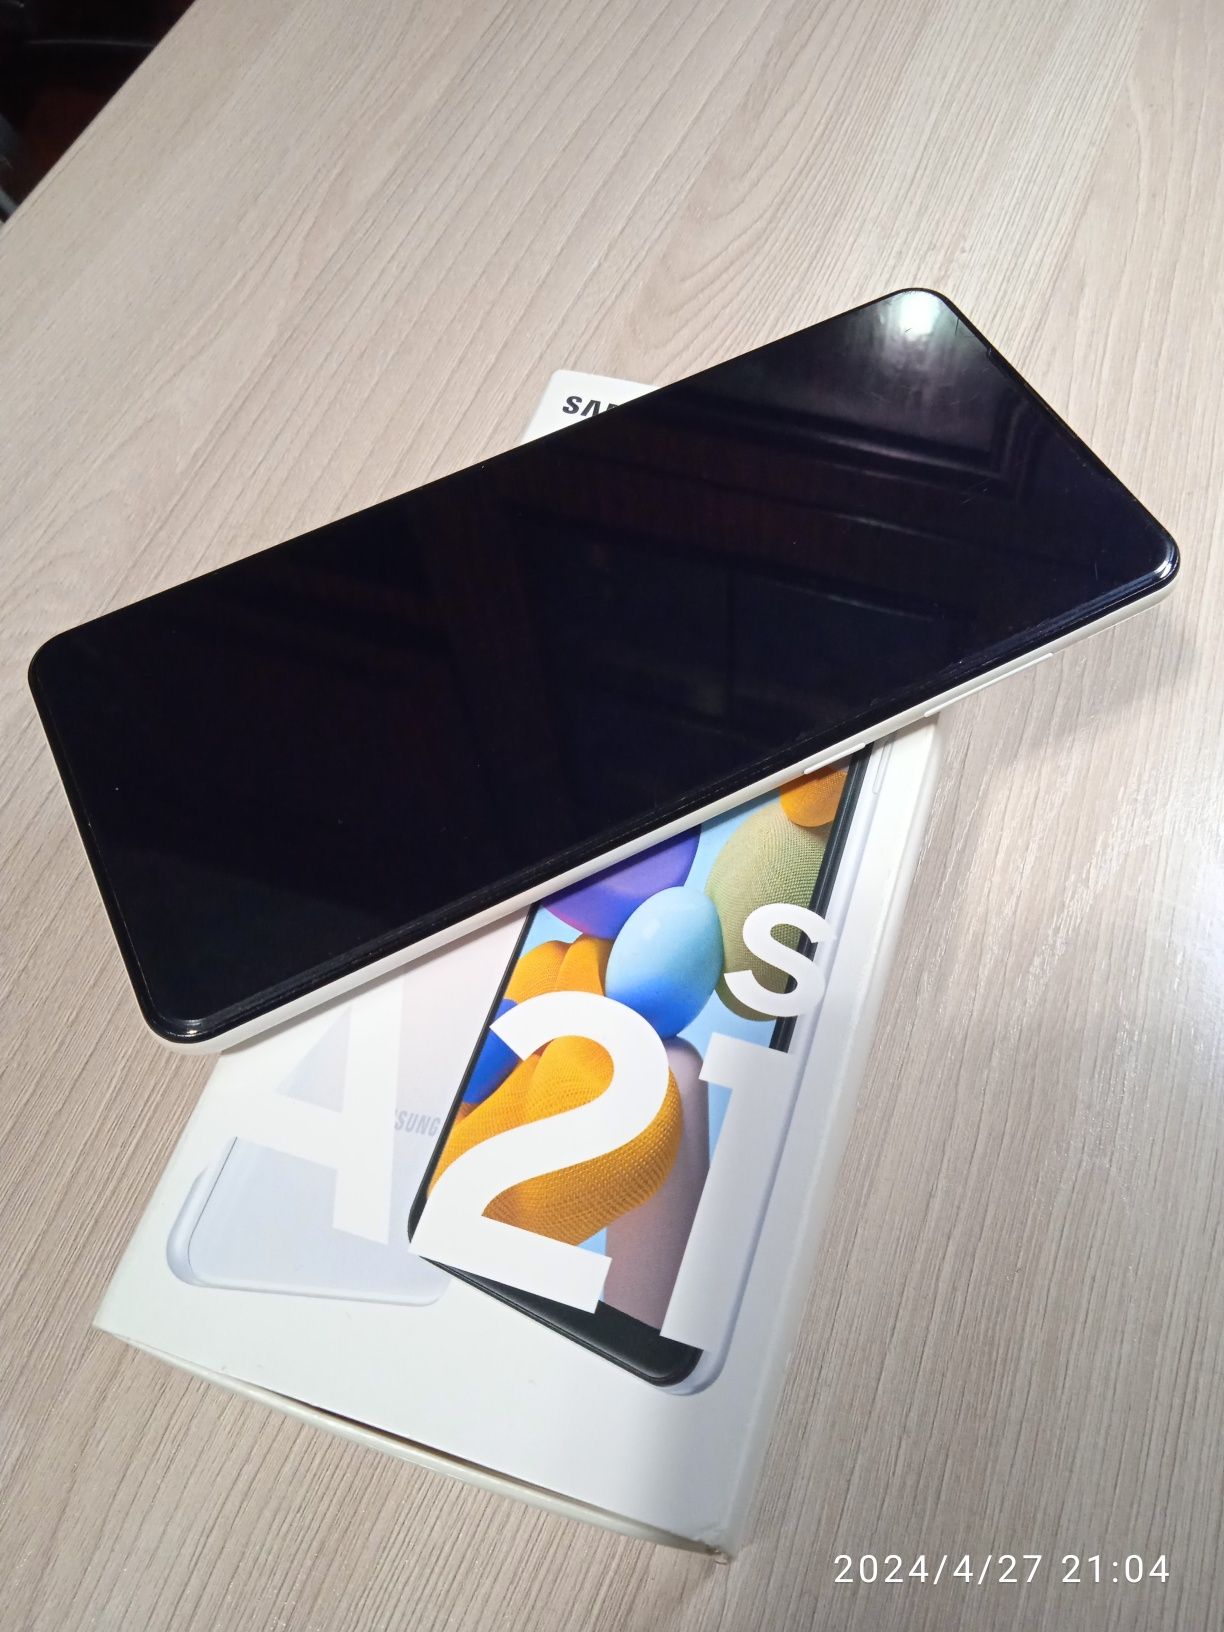 Samsung A 21 S , смартфон, 3/32